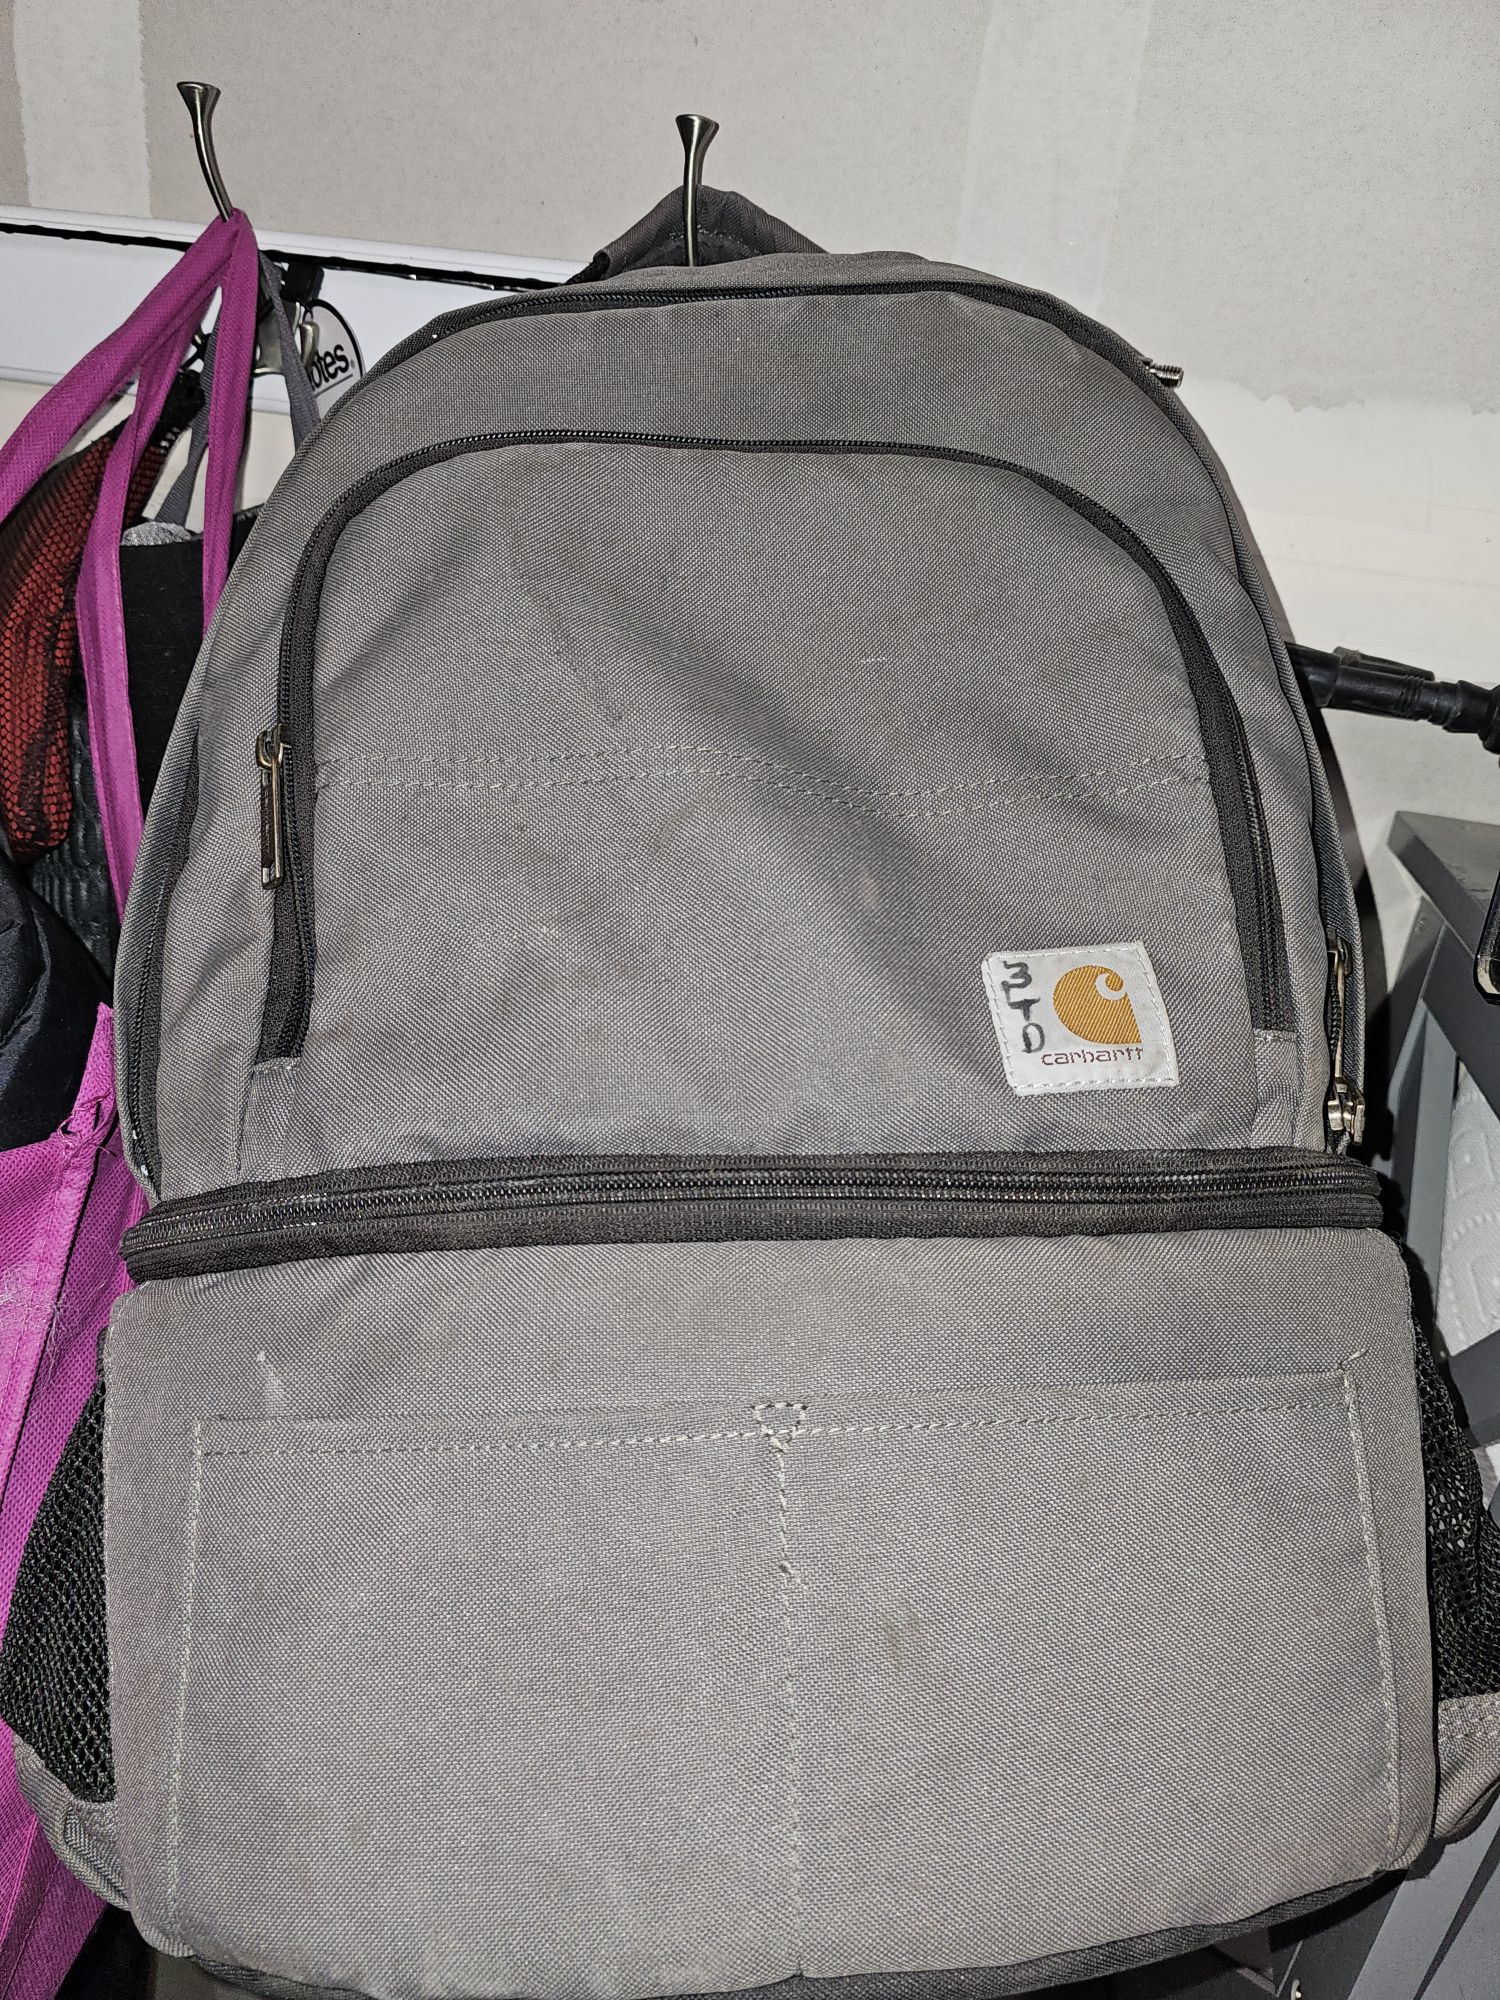 Carhartt Cooler backpack